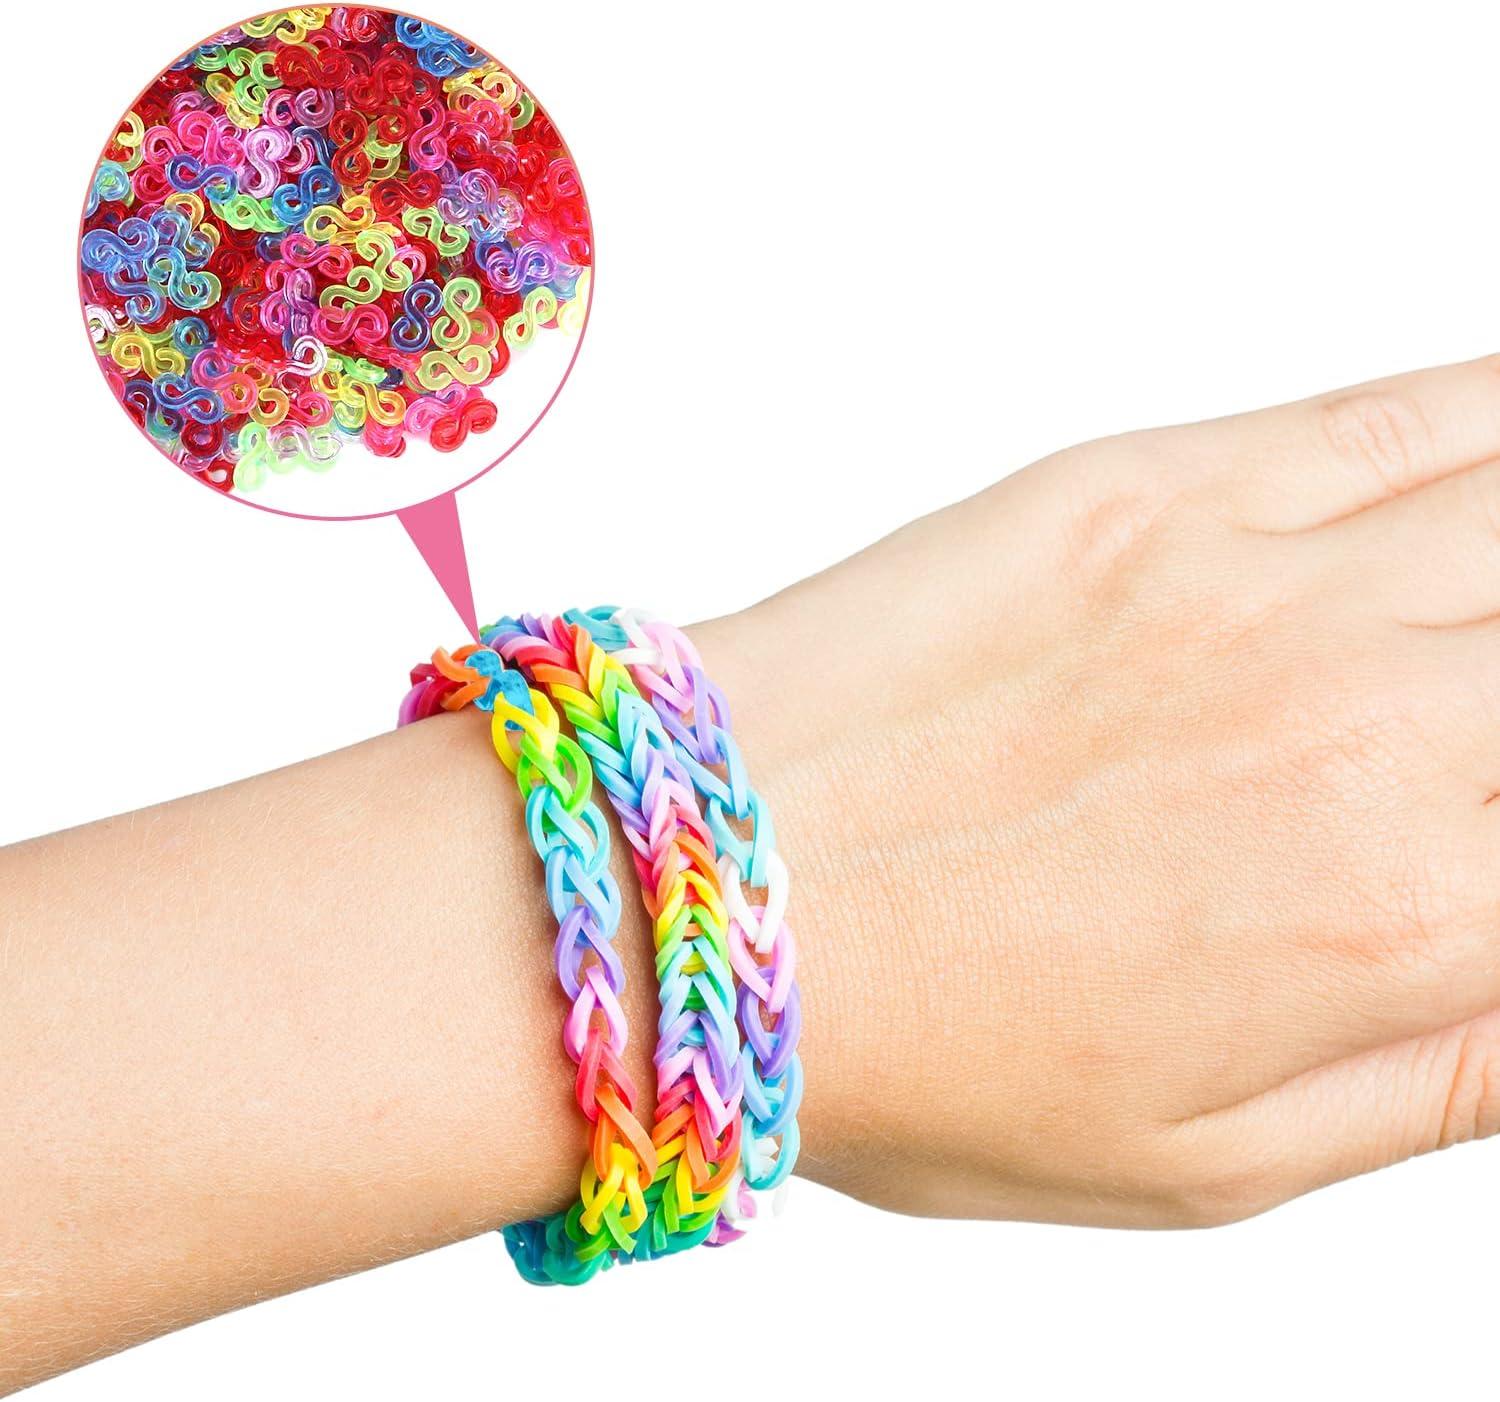 Make Rubber Band Bracelets: 11 Rubber Band Loom Patterns |  AllFreeJewelryMaking.com